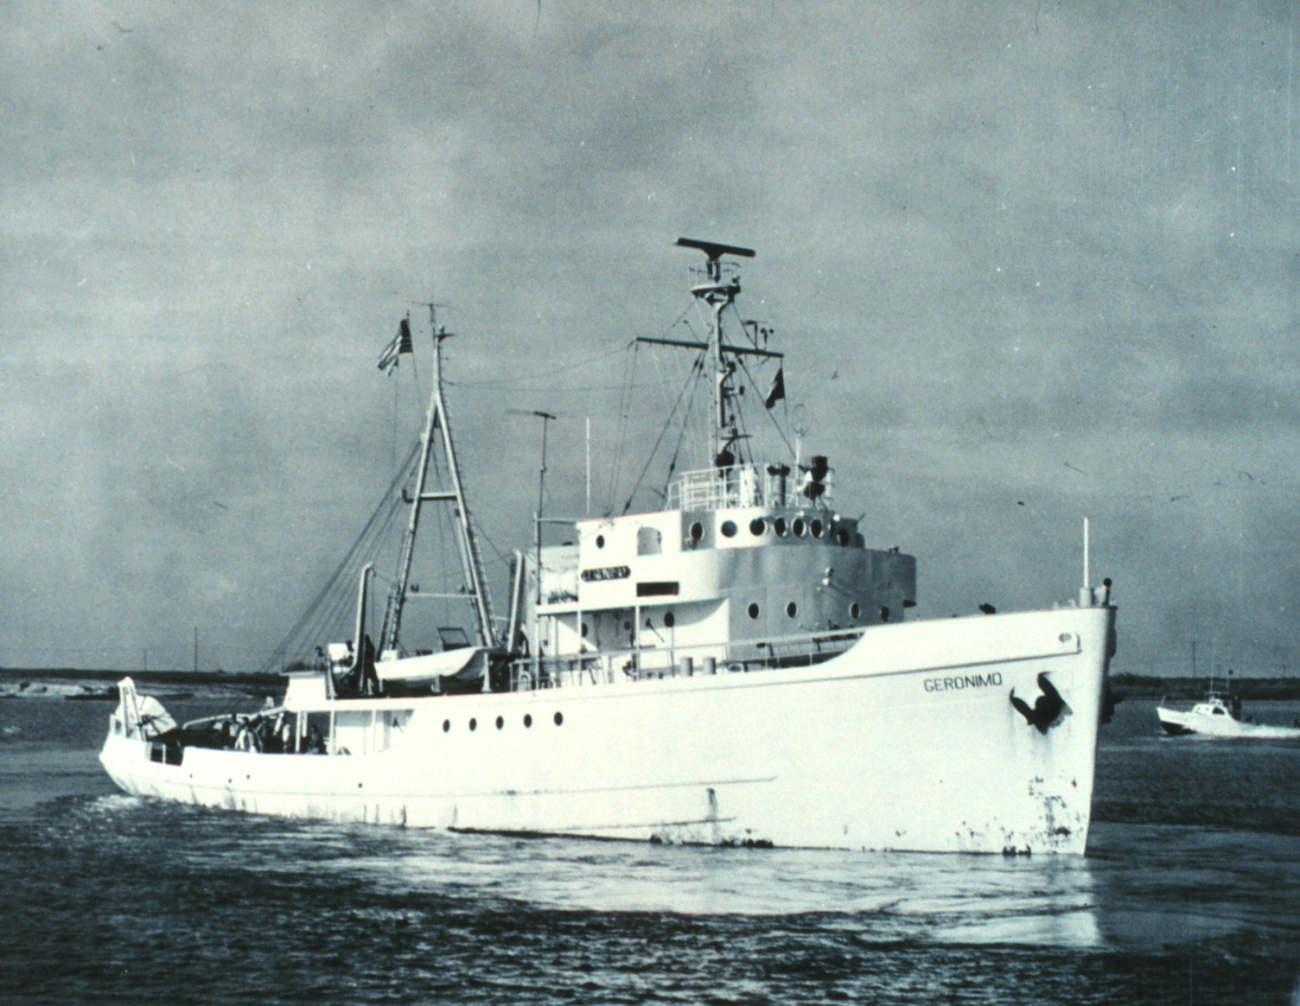 Bureau of Commercial Fisheries Vessel GERONIMO